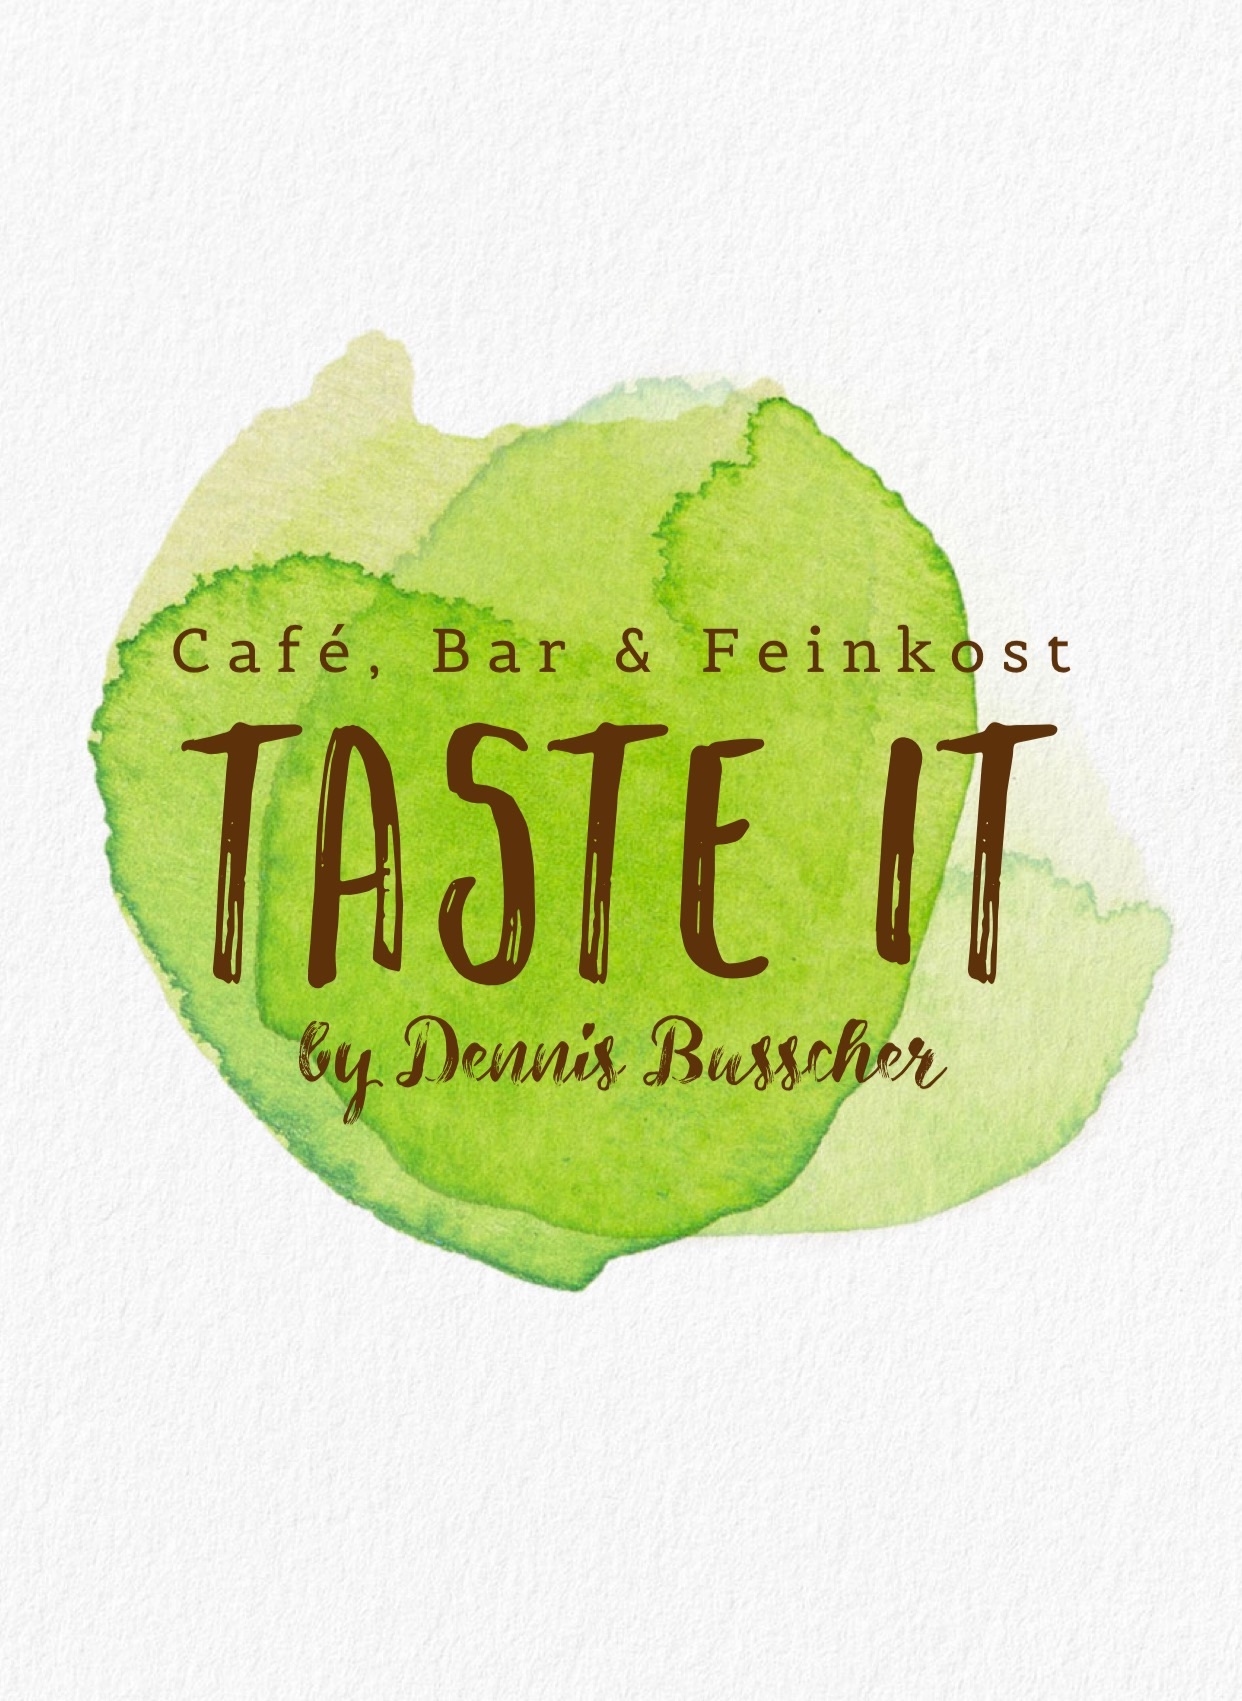 Treue | TASTE IT - Café, Bar & Feinkost